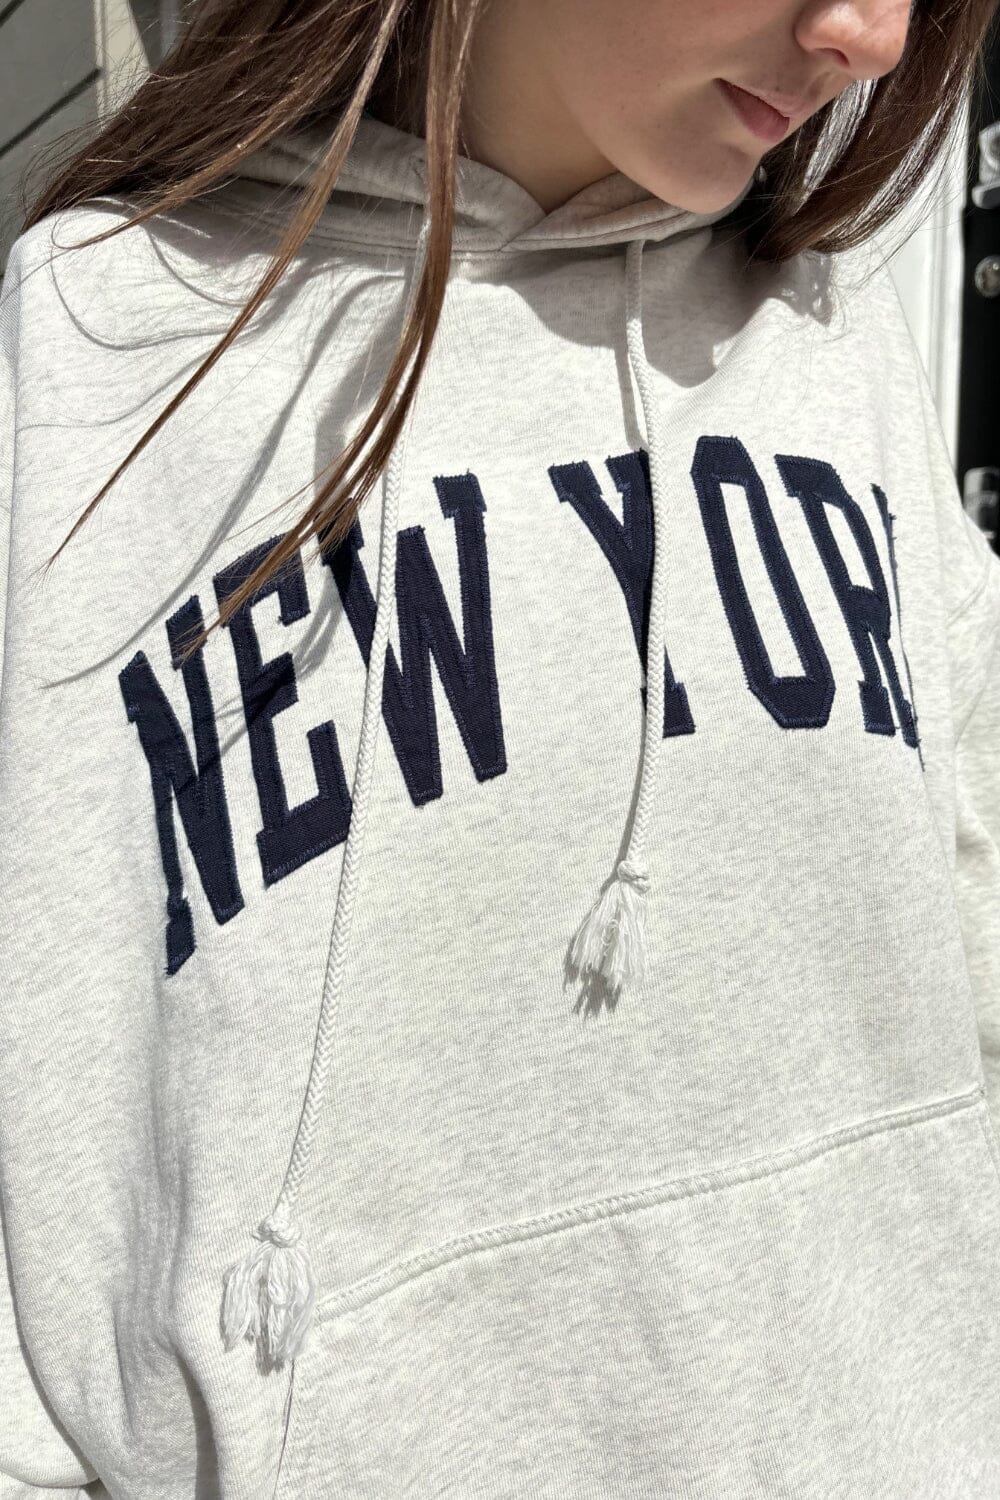 Brandy Melville Christy New York hoodie  Womens sweatshirts fashion, Hoodie  fashion, Sweatshirts women